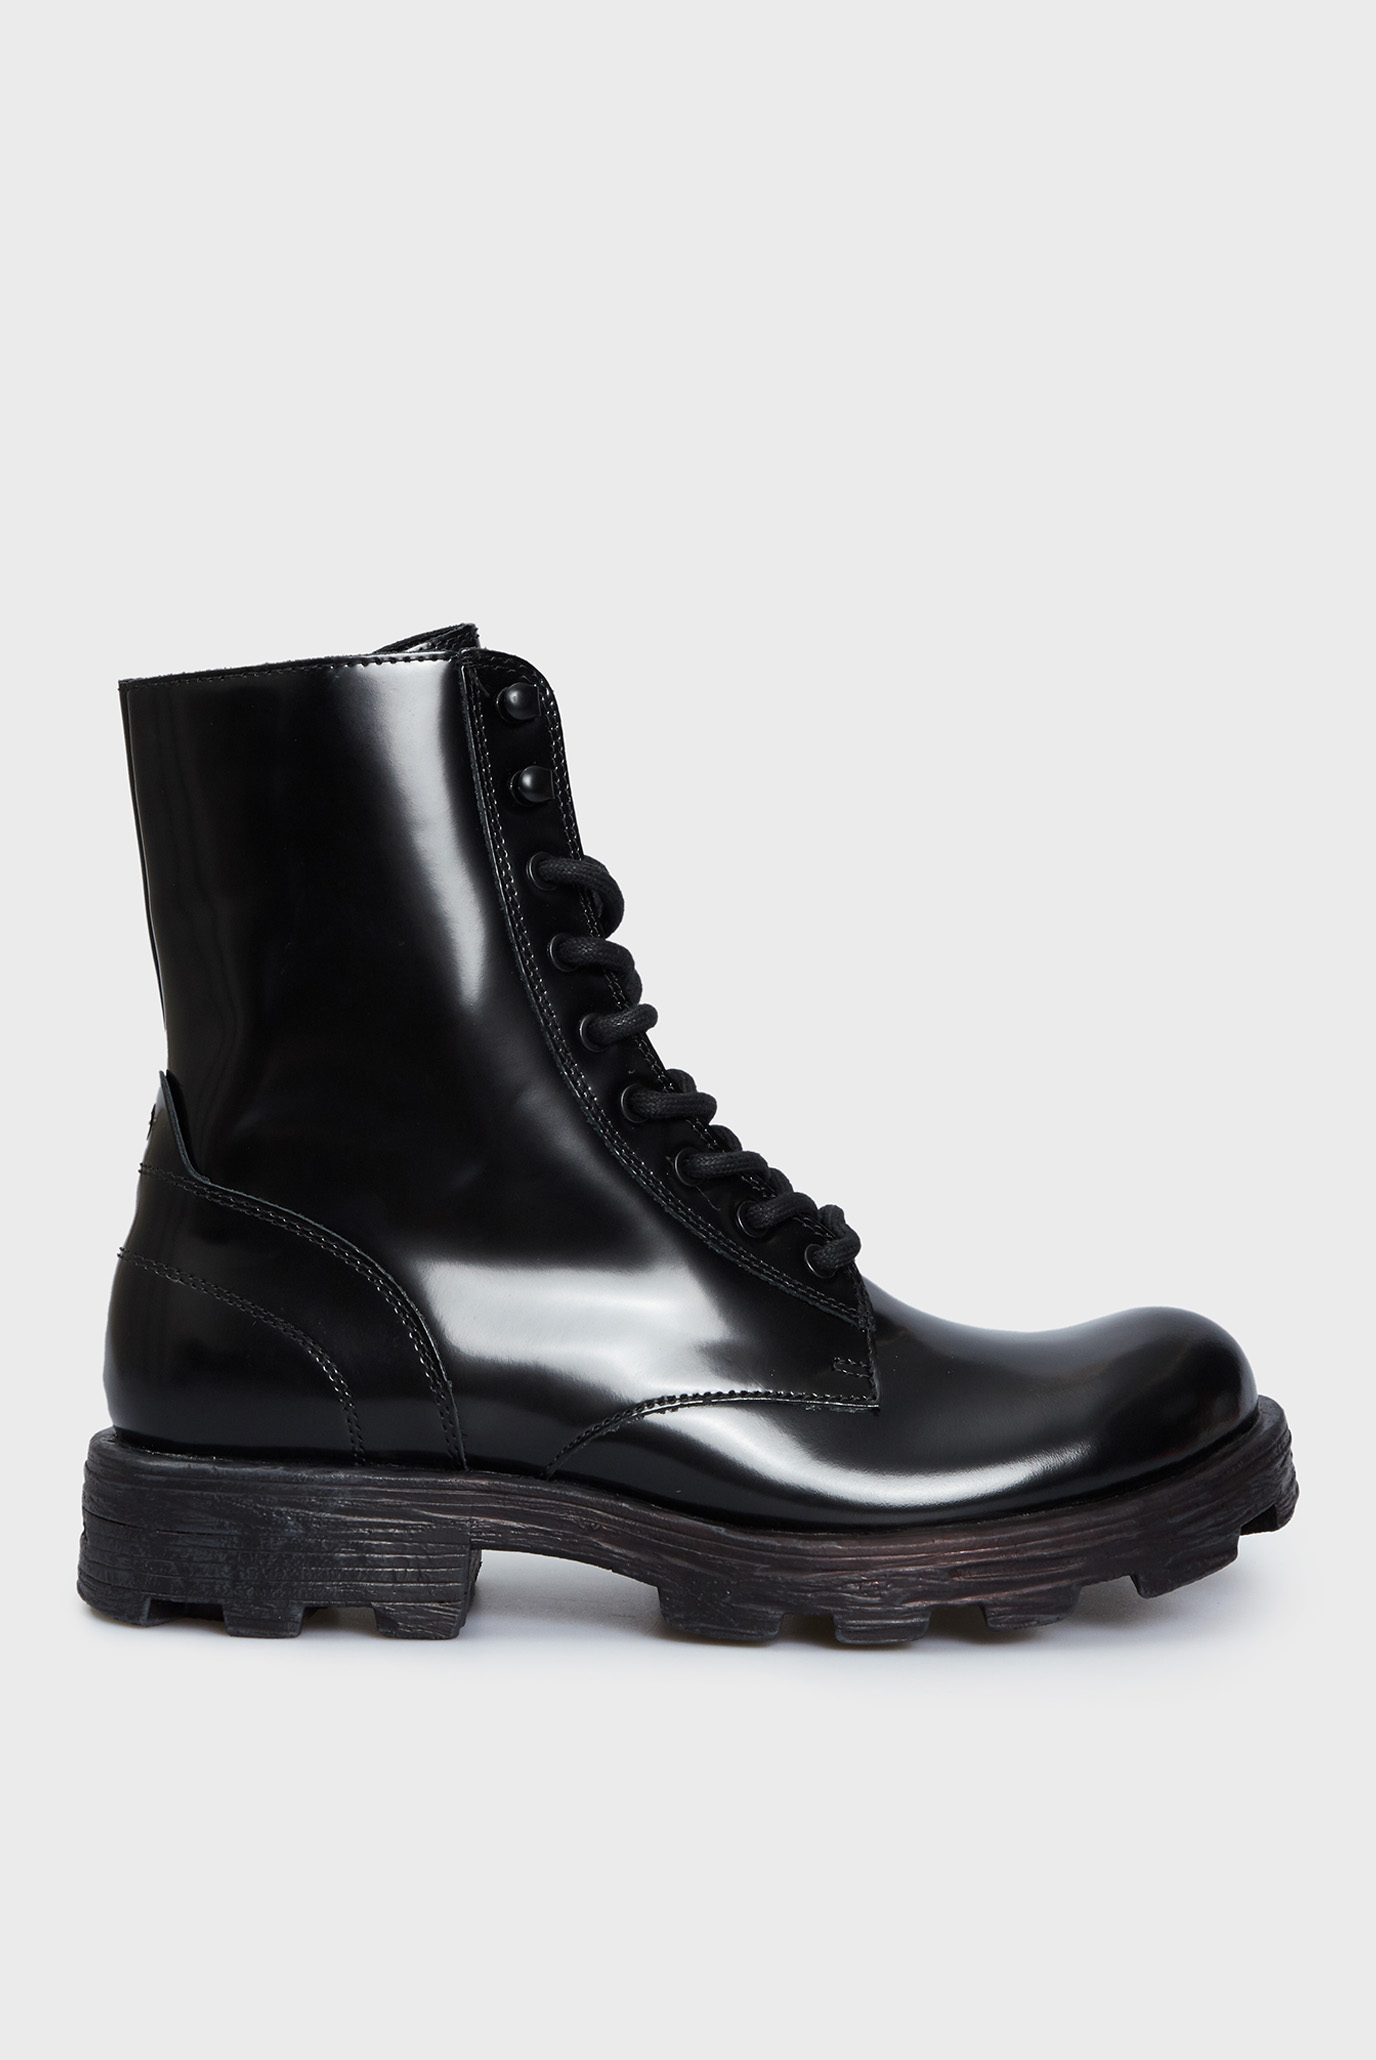 Мужские черные кожаные ботинки HAMMER / D-HAMMER 1